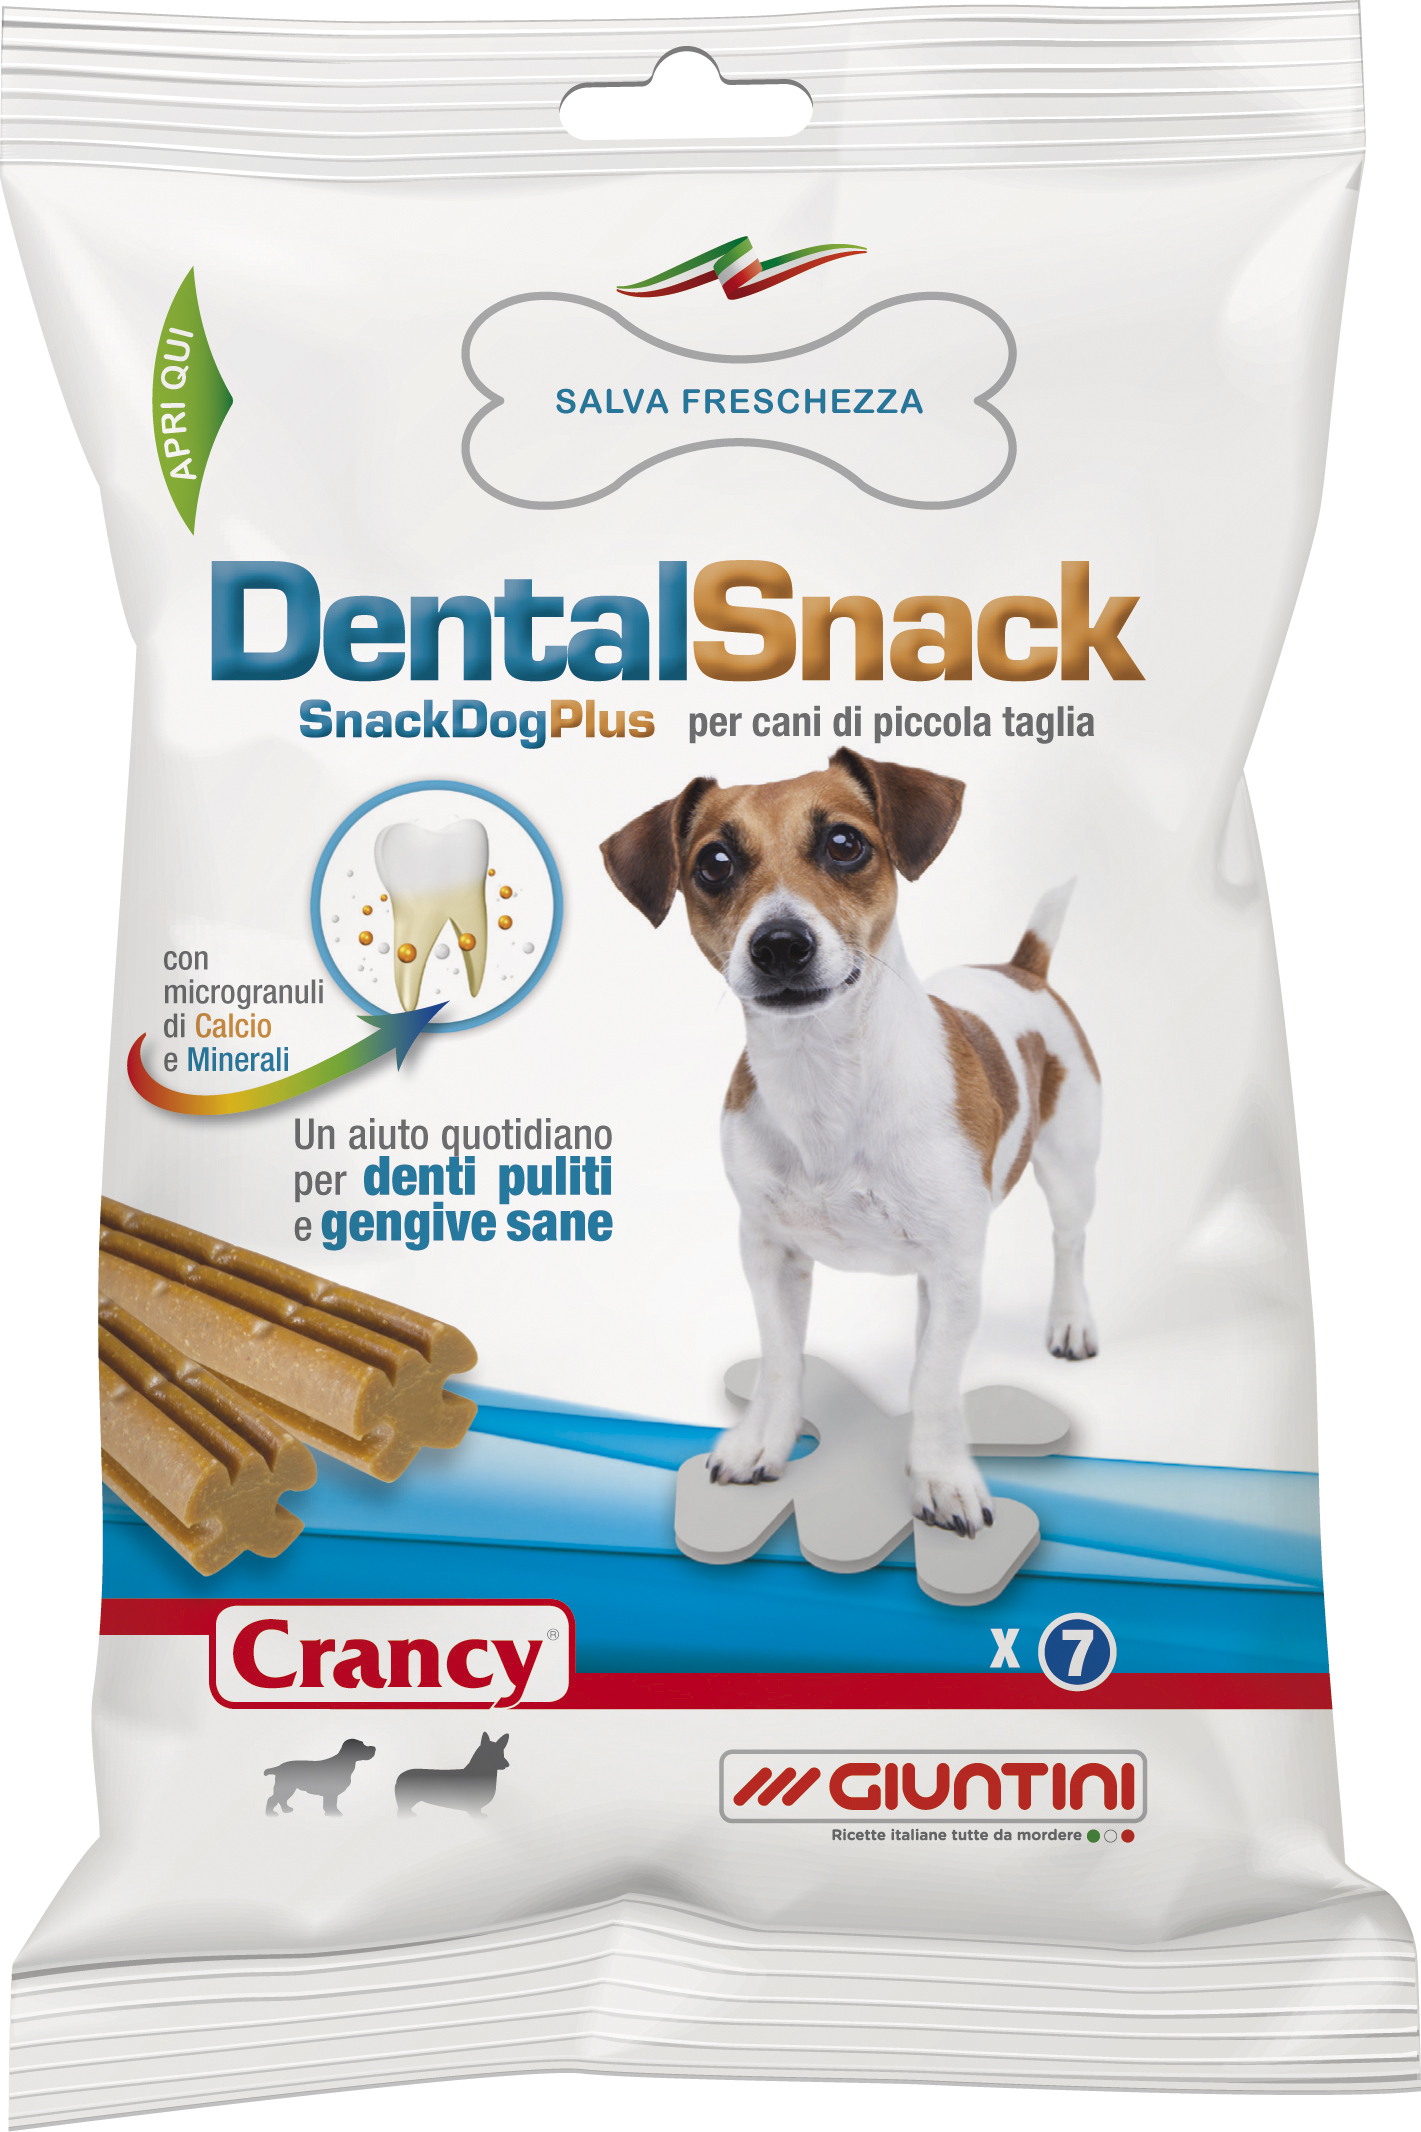 Crancy Dental Snack per cani di piccola taglia (1 x 25 bustine